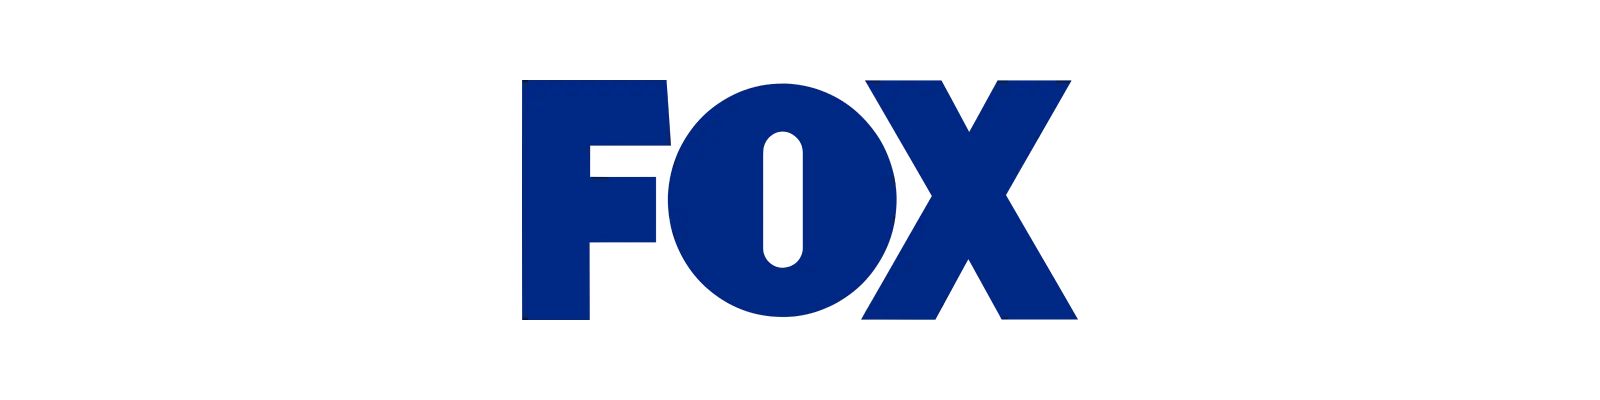 Fox_